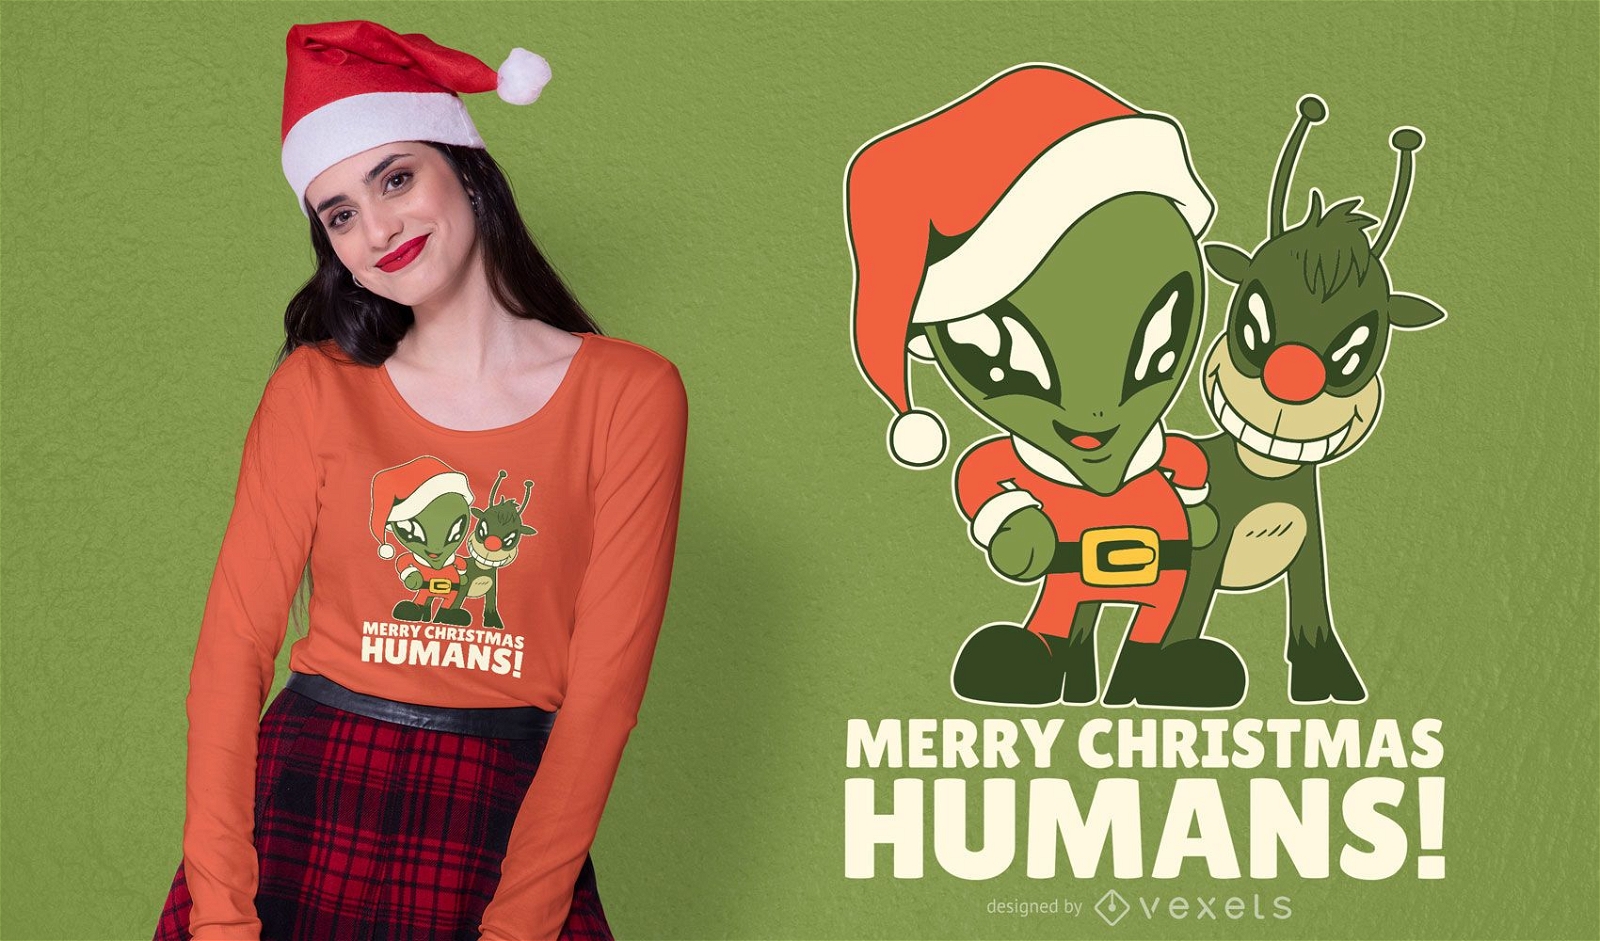 Merry christmas humans t-shirt design